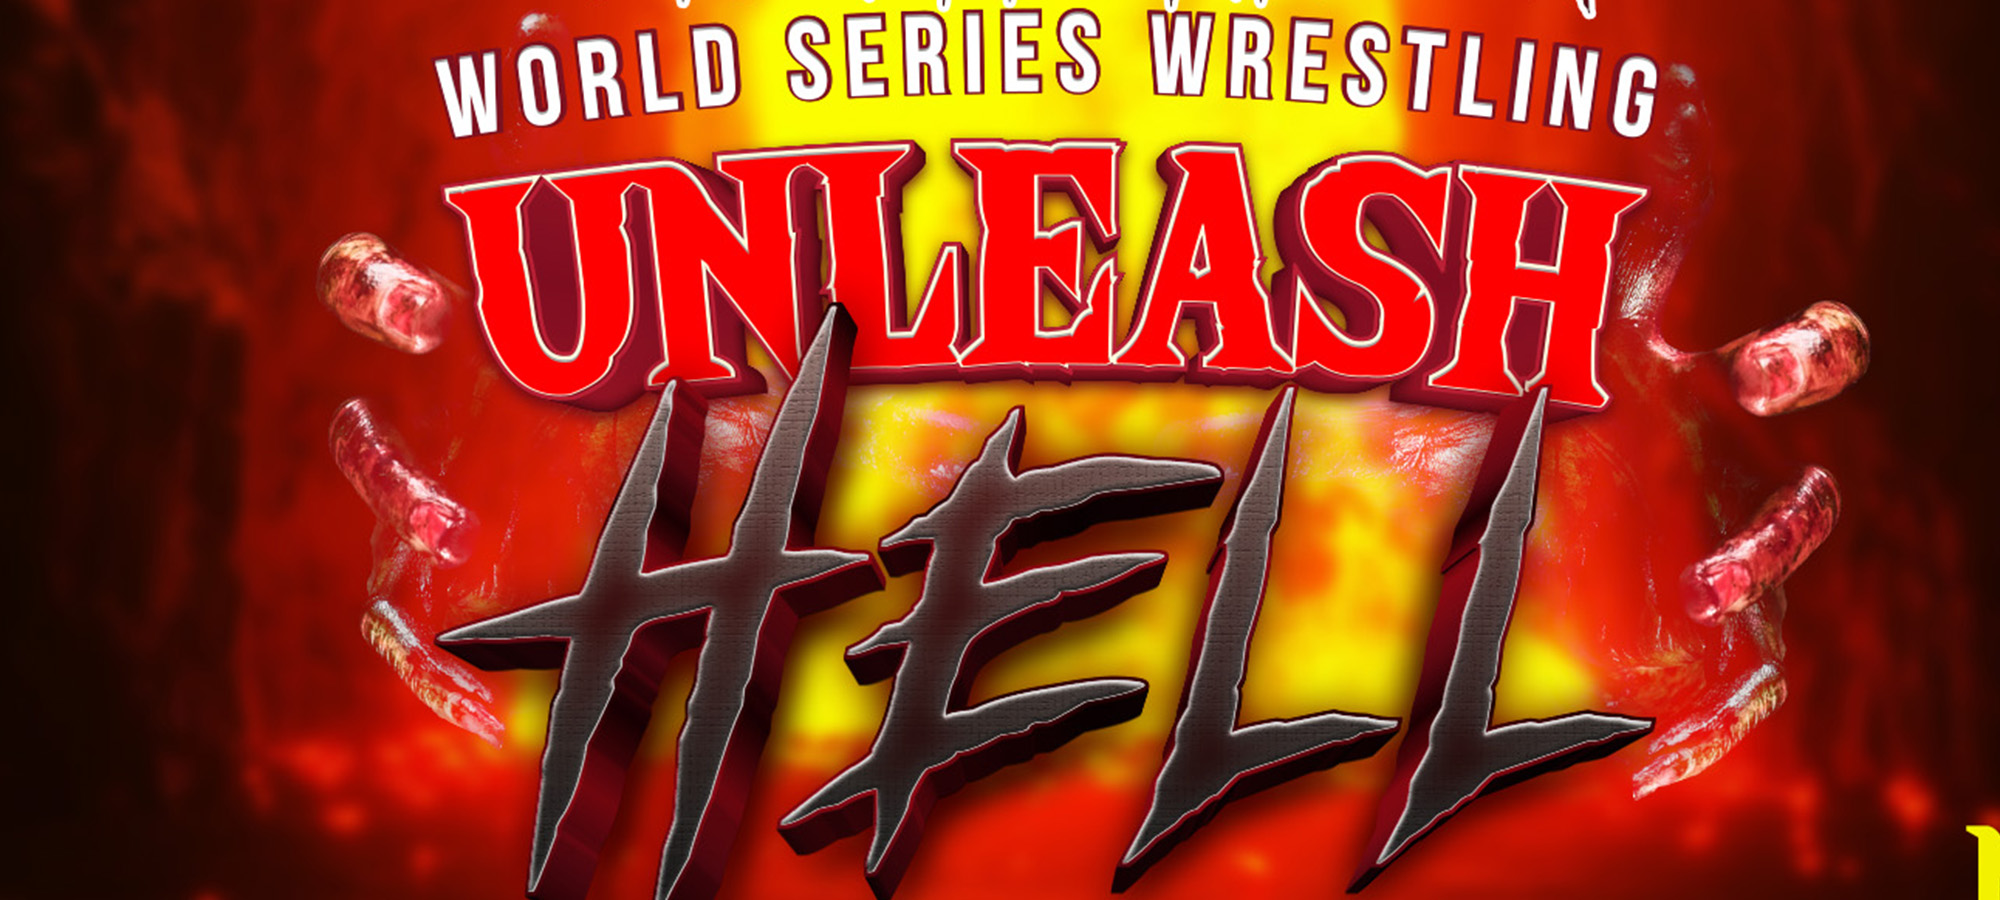 World Series Wrestling – Unleash Hell